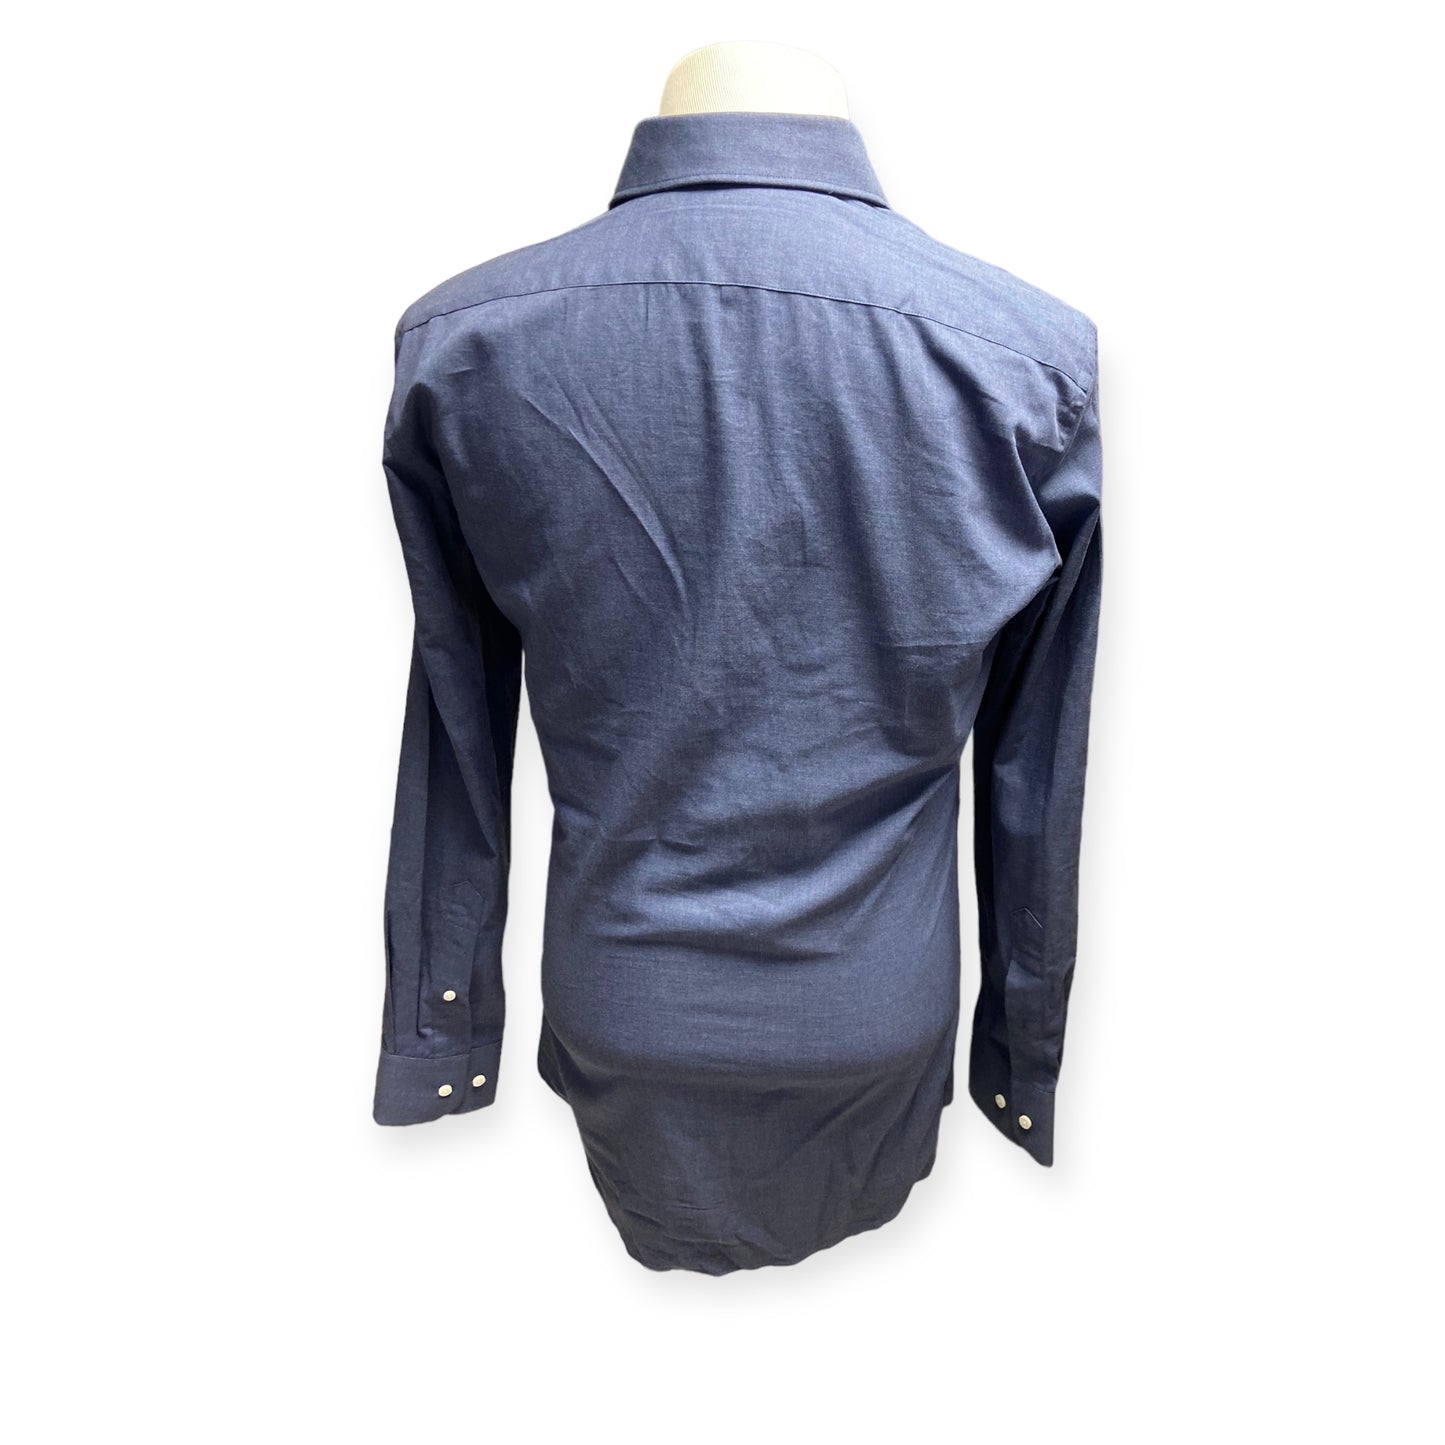 NWT Indochino Melange Navy Button Down Dress Shirt (size S)